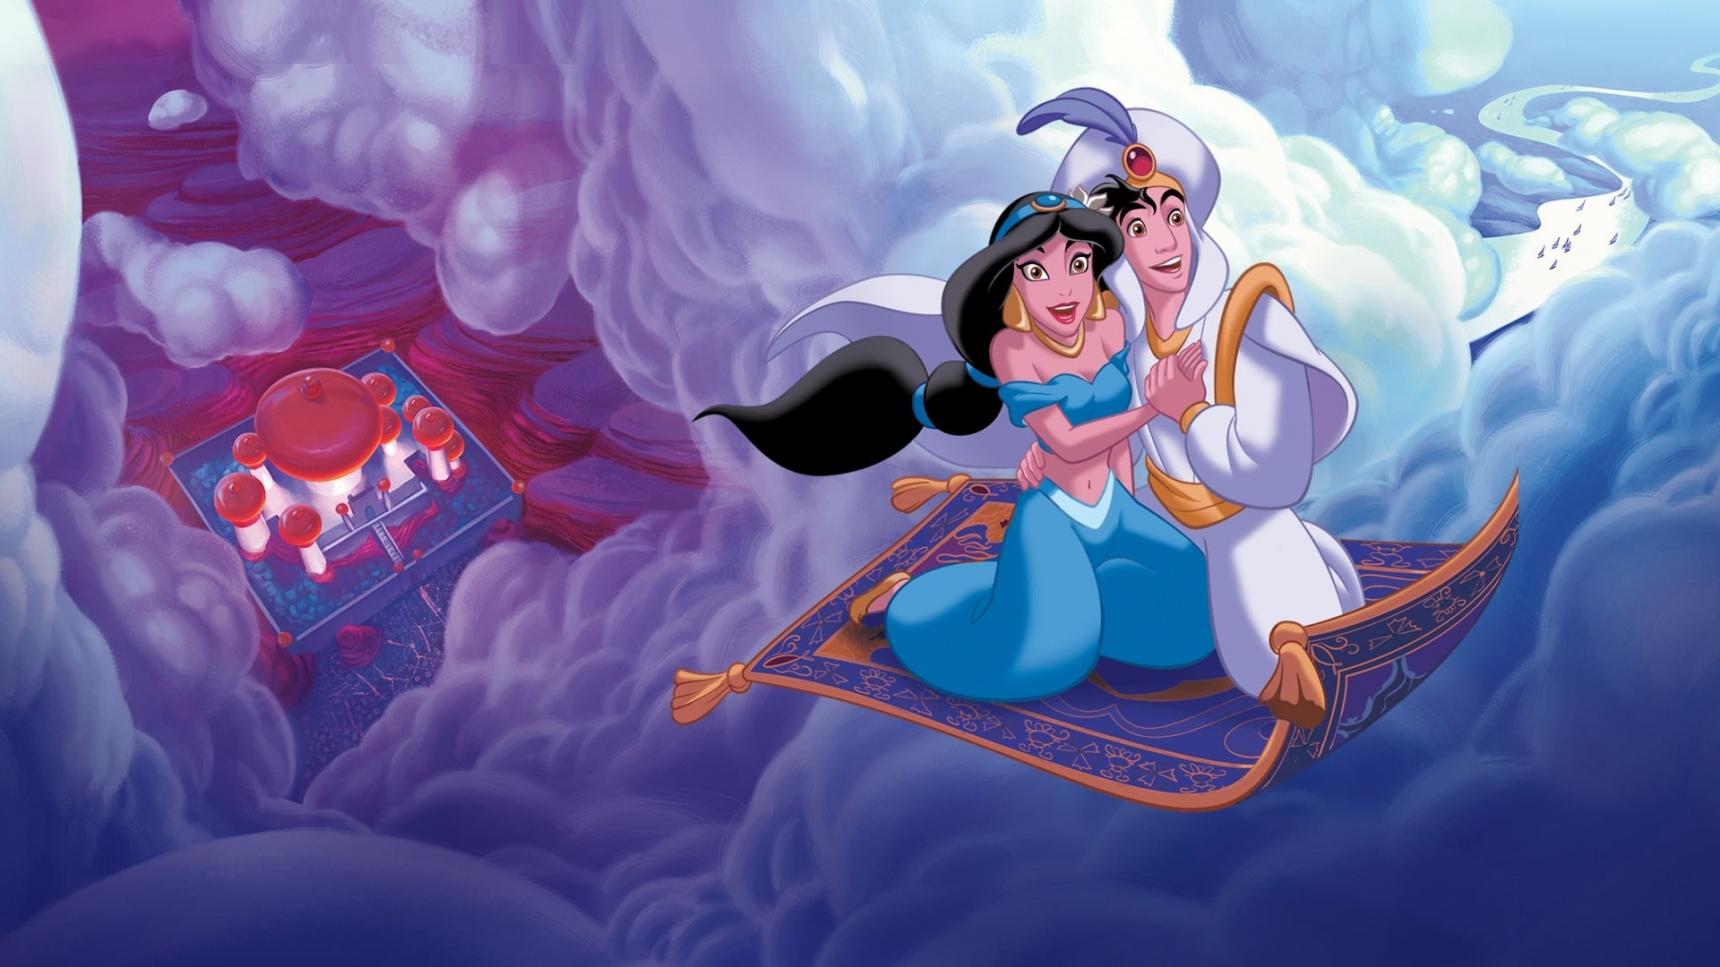 poster de Aladdin